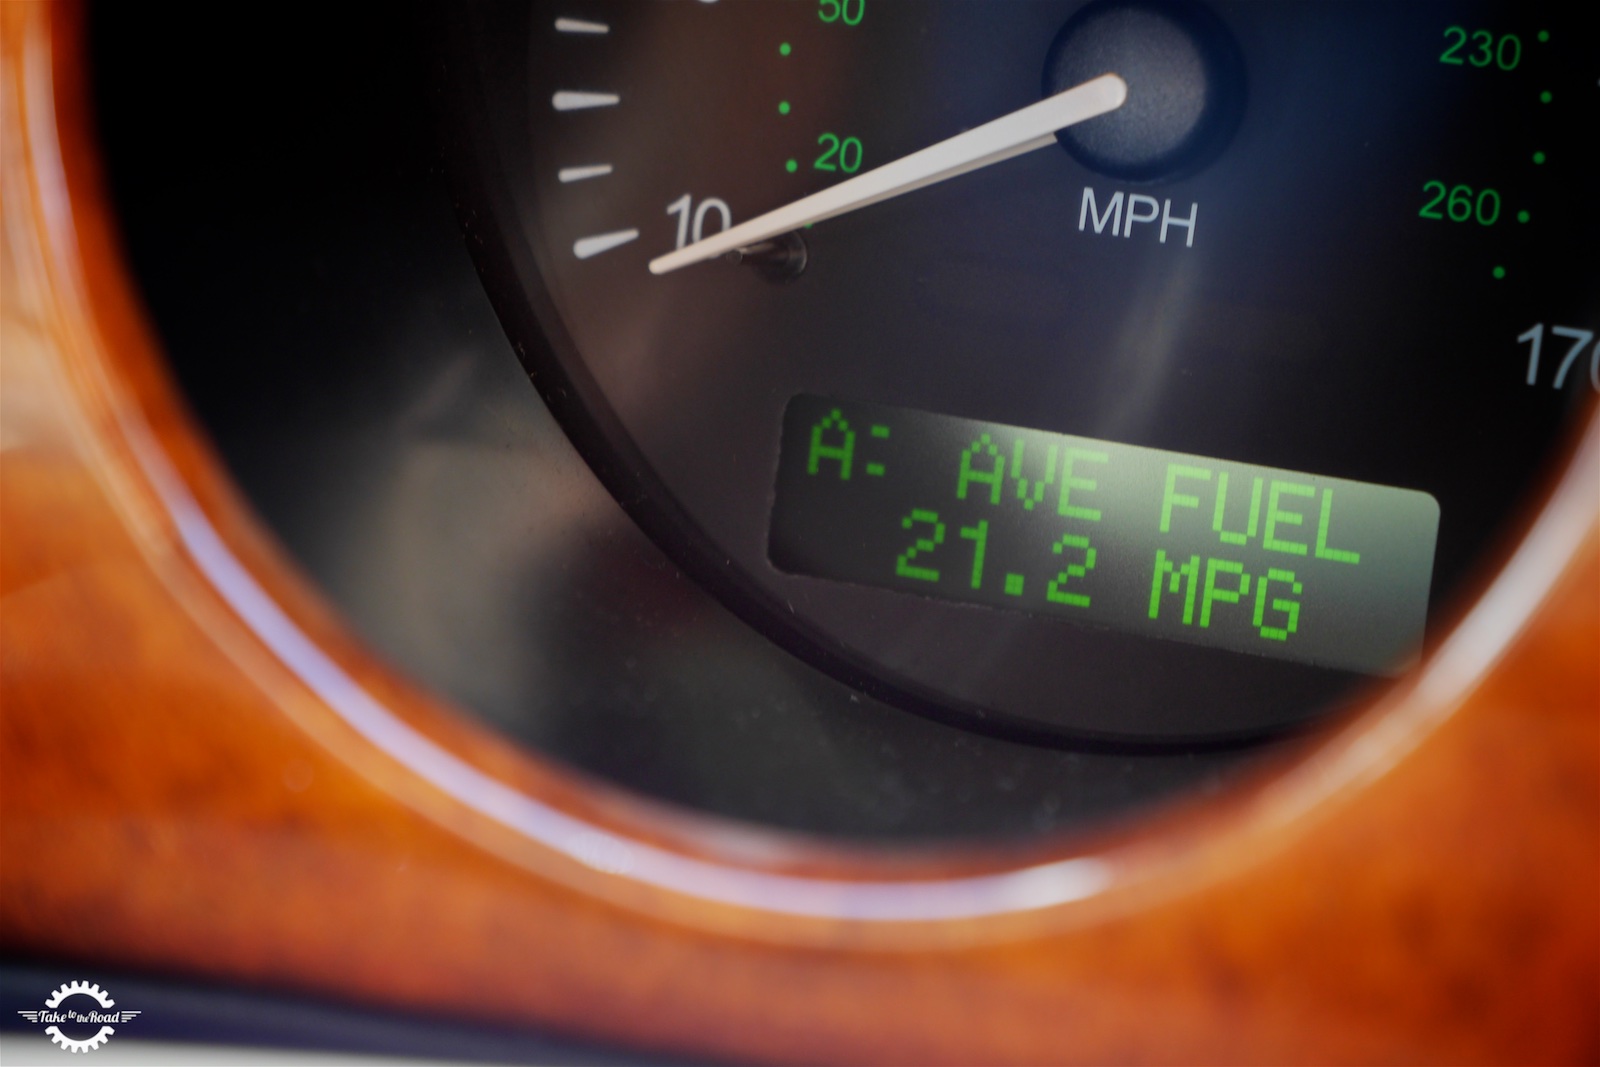 Take to the Road Jaguar XJ8 Redex Trial Part 2